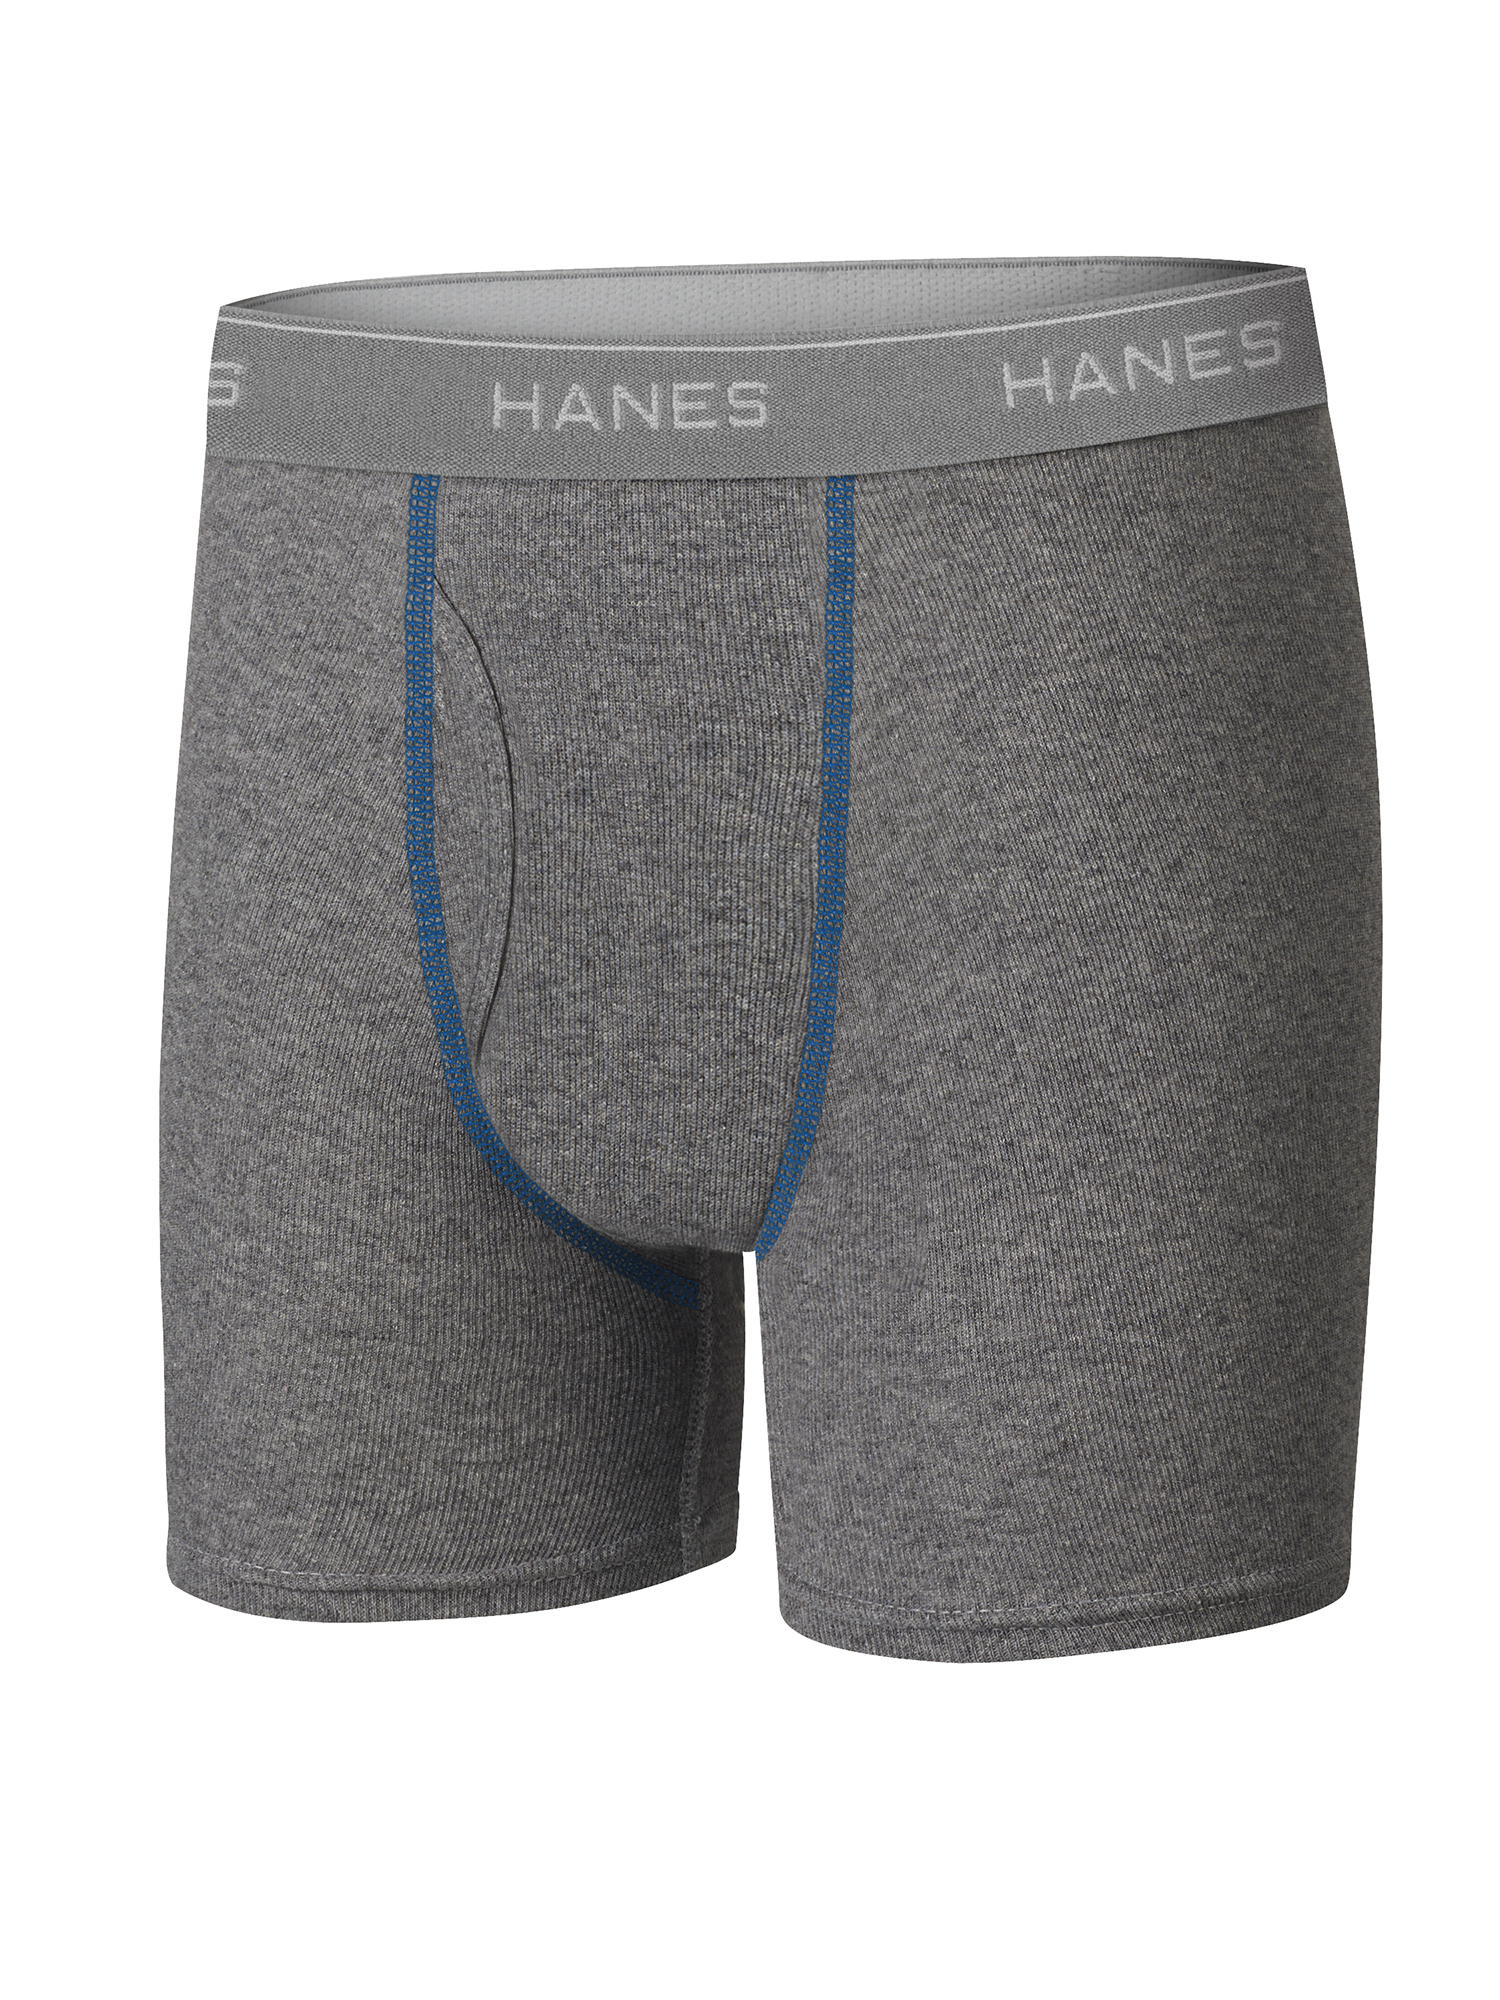 Hanes Boys, 10 + 3 Bonus Pack, Tagless, Cool Comfort Boxer Briefs, Sizes S (6/8) - XL (18/20) - image 2 of 7